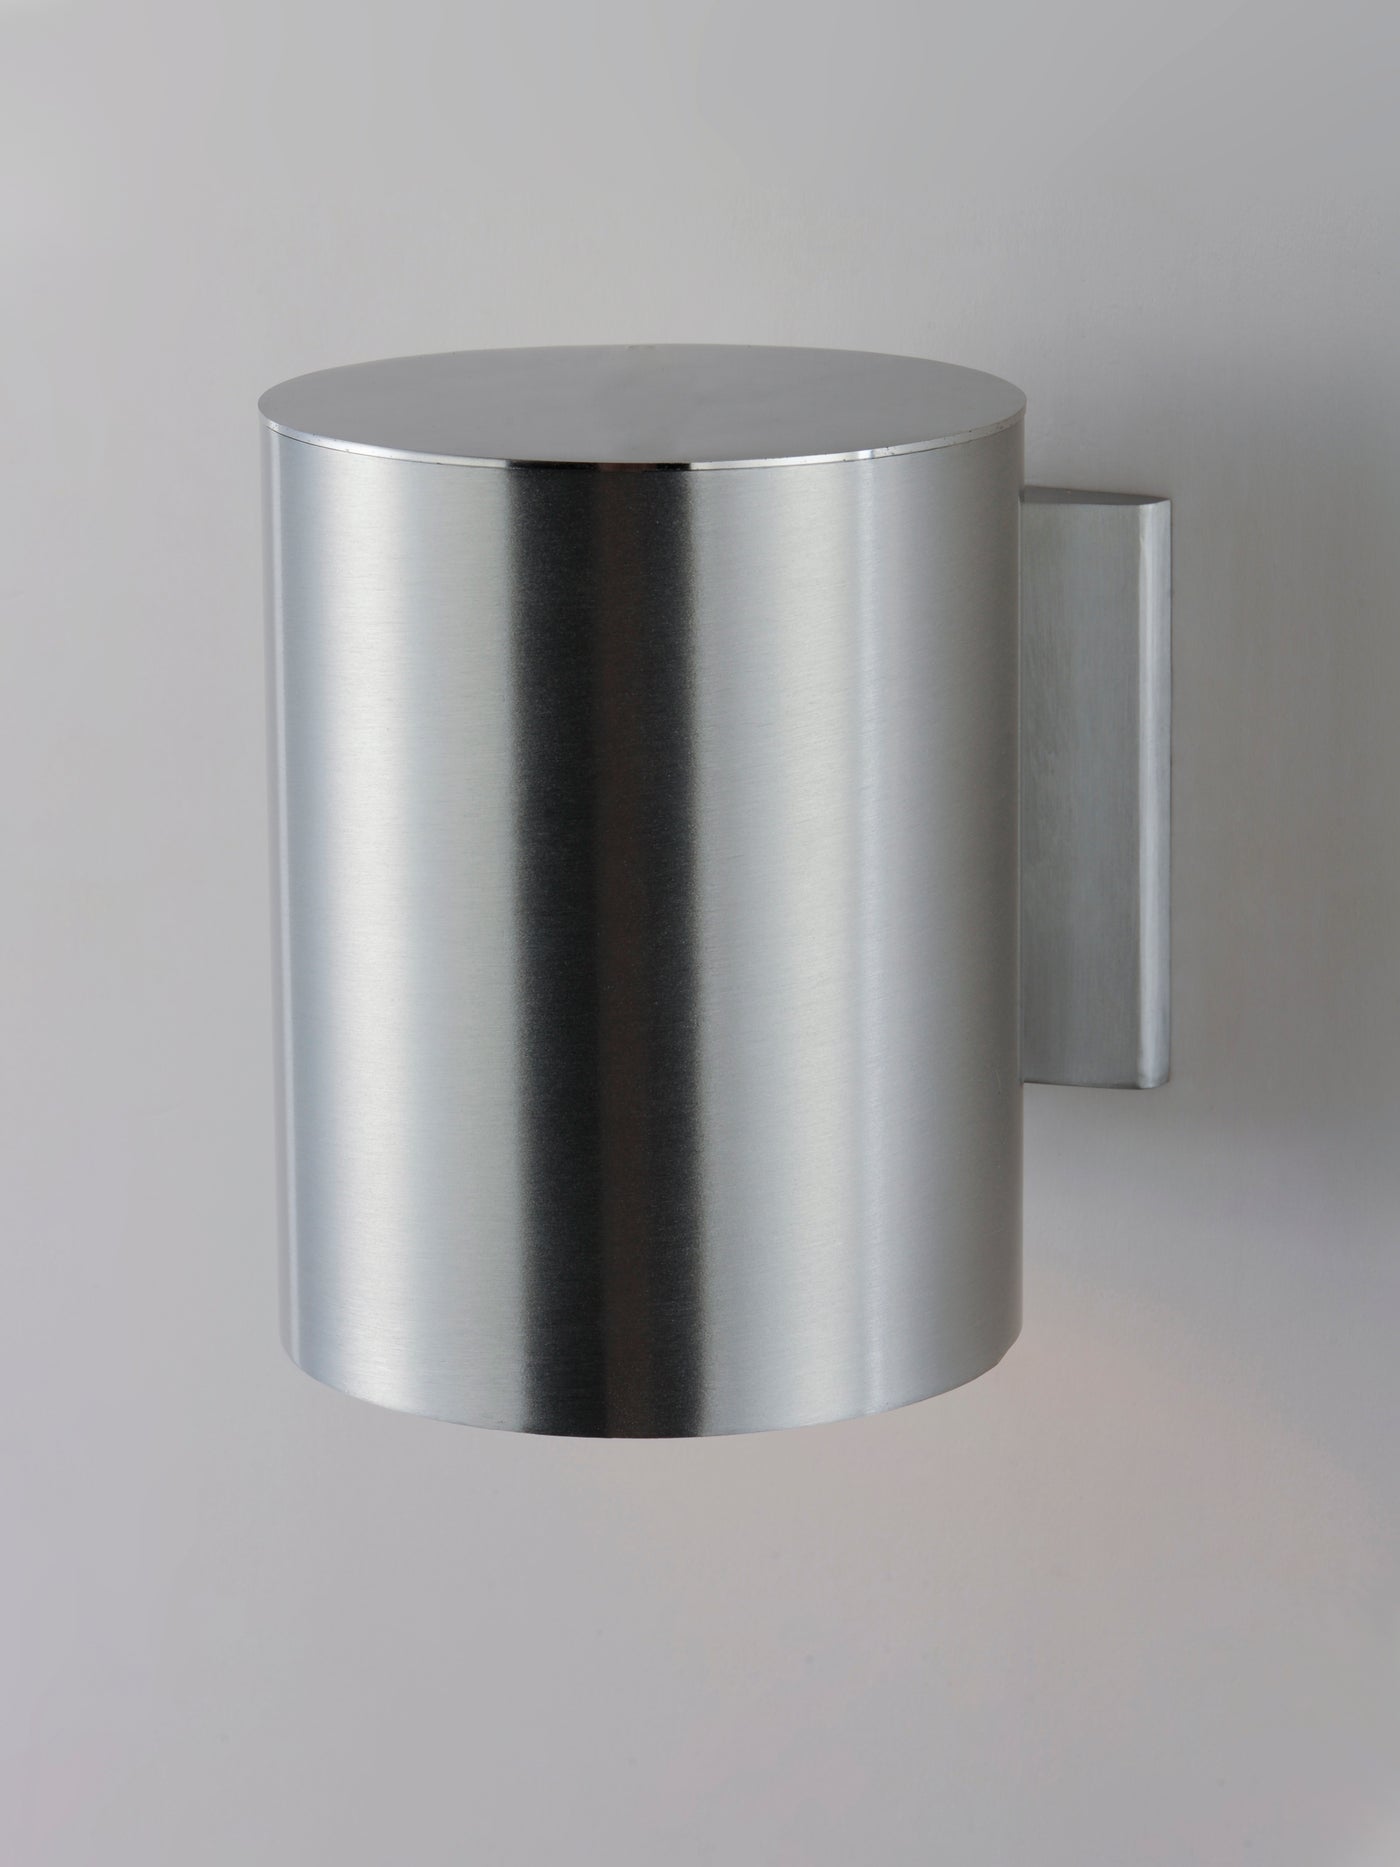 5" Cylinder Down Light, 480 Lumens, 40 Watt, 120 Volts, Brushed Aluminum or Black Finish, Photo Cell Optional